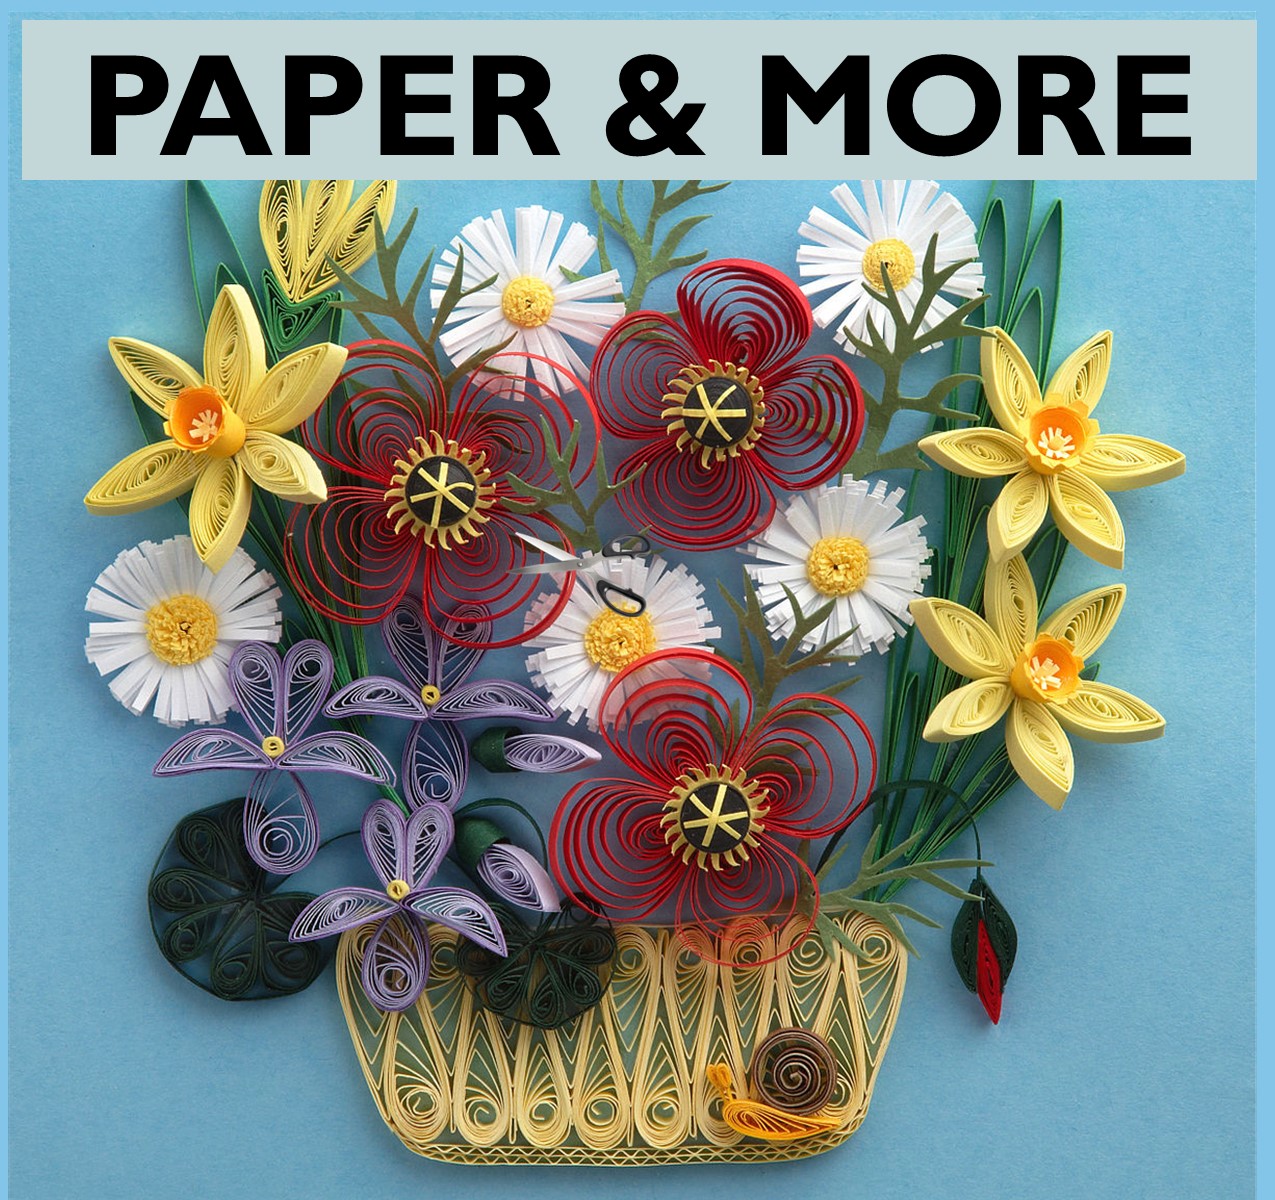 Paper & More